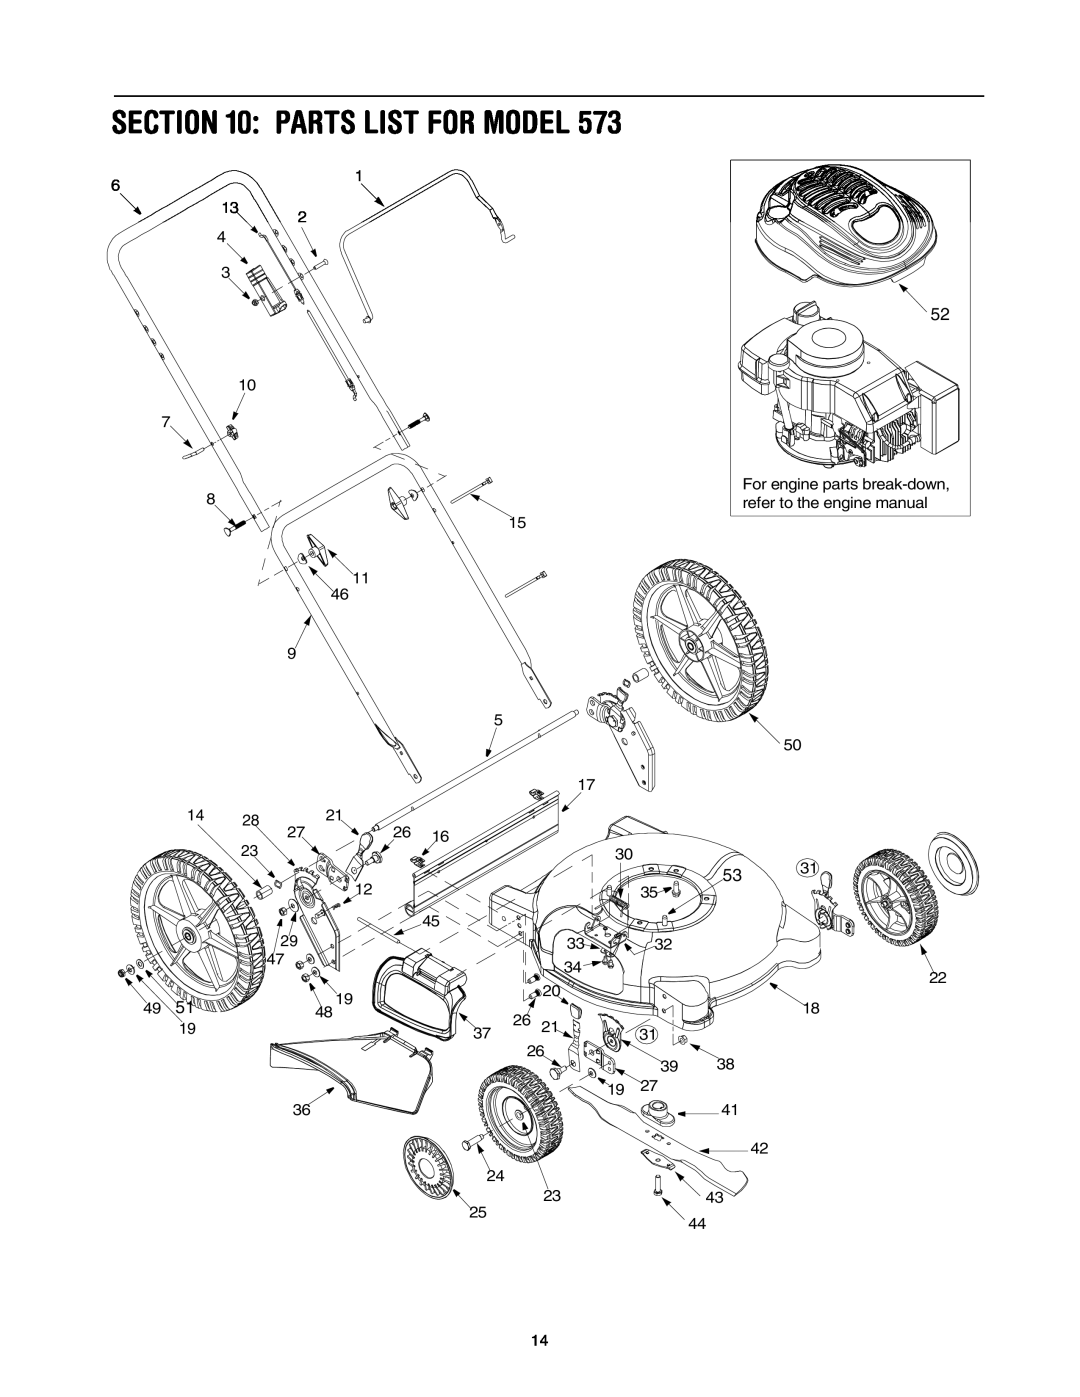 Yard-Man 573 manual Parts List For Model 